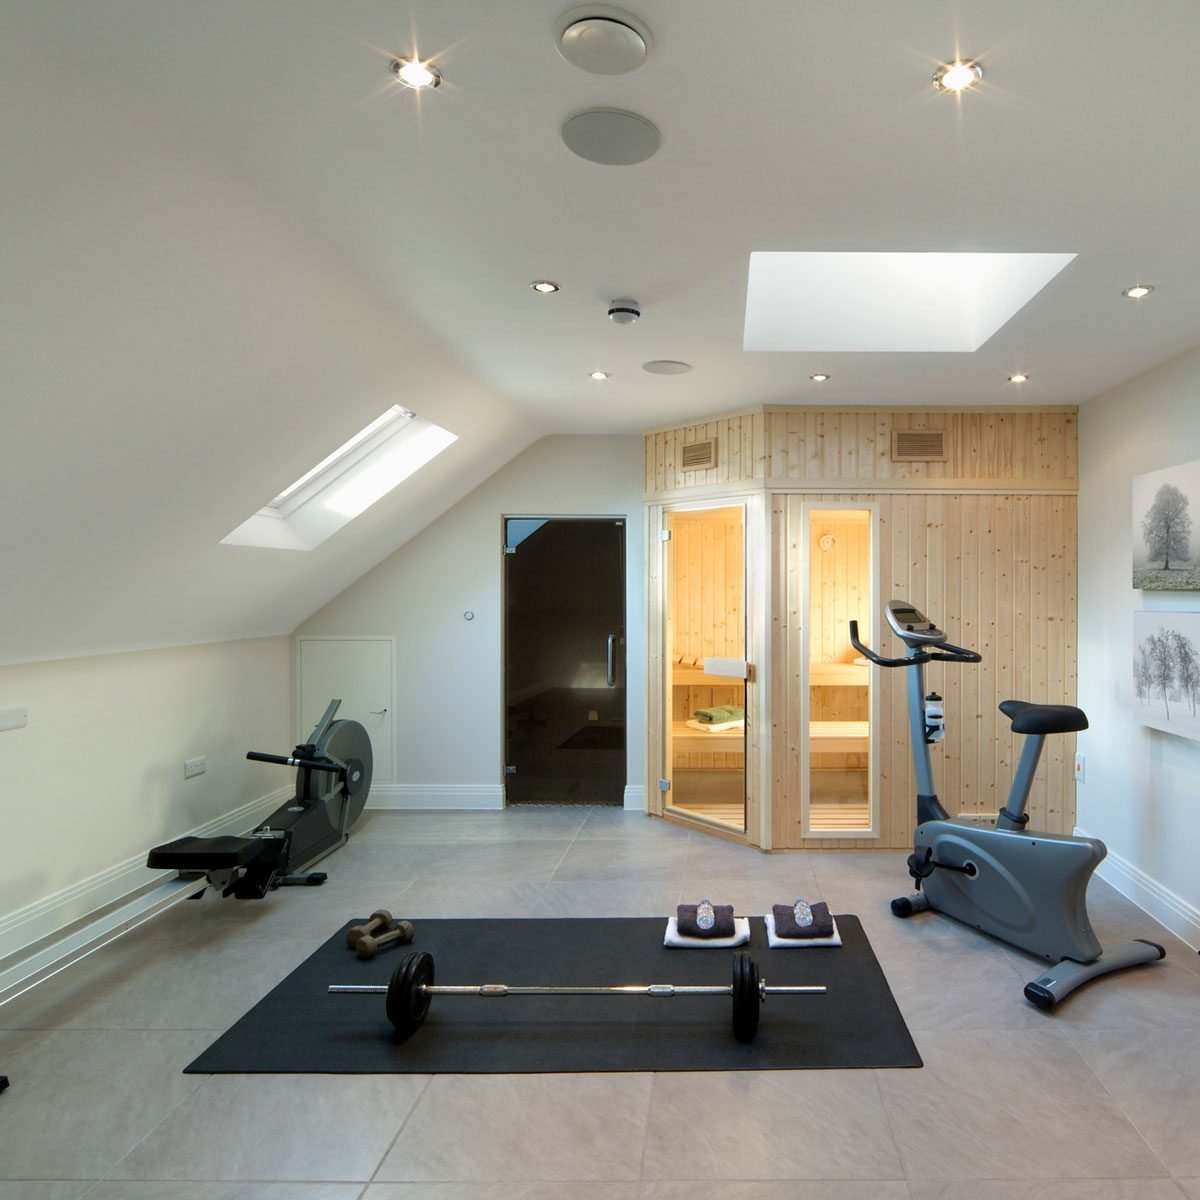 The 5 Best Home Gym Flooring Ideas | Family Handyman